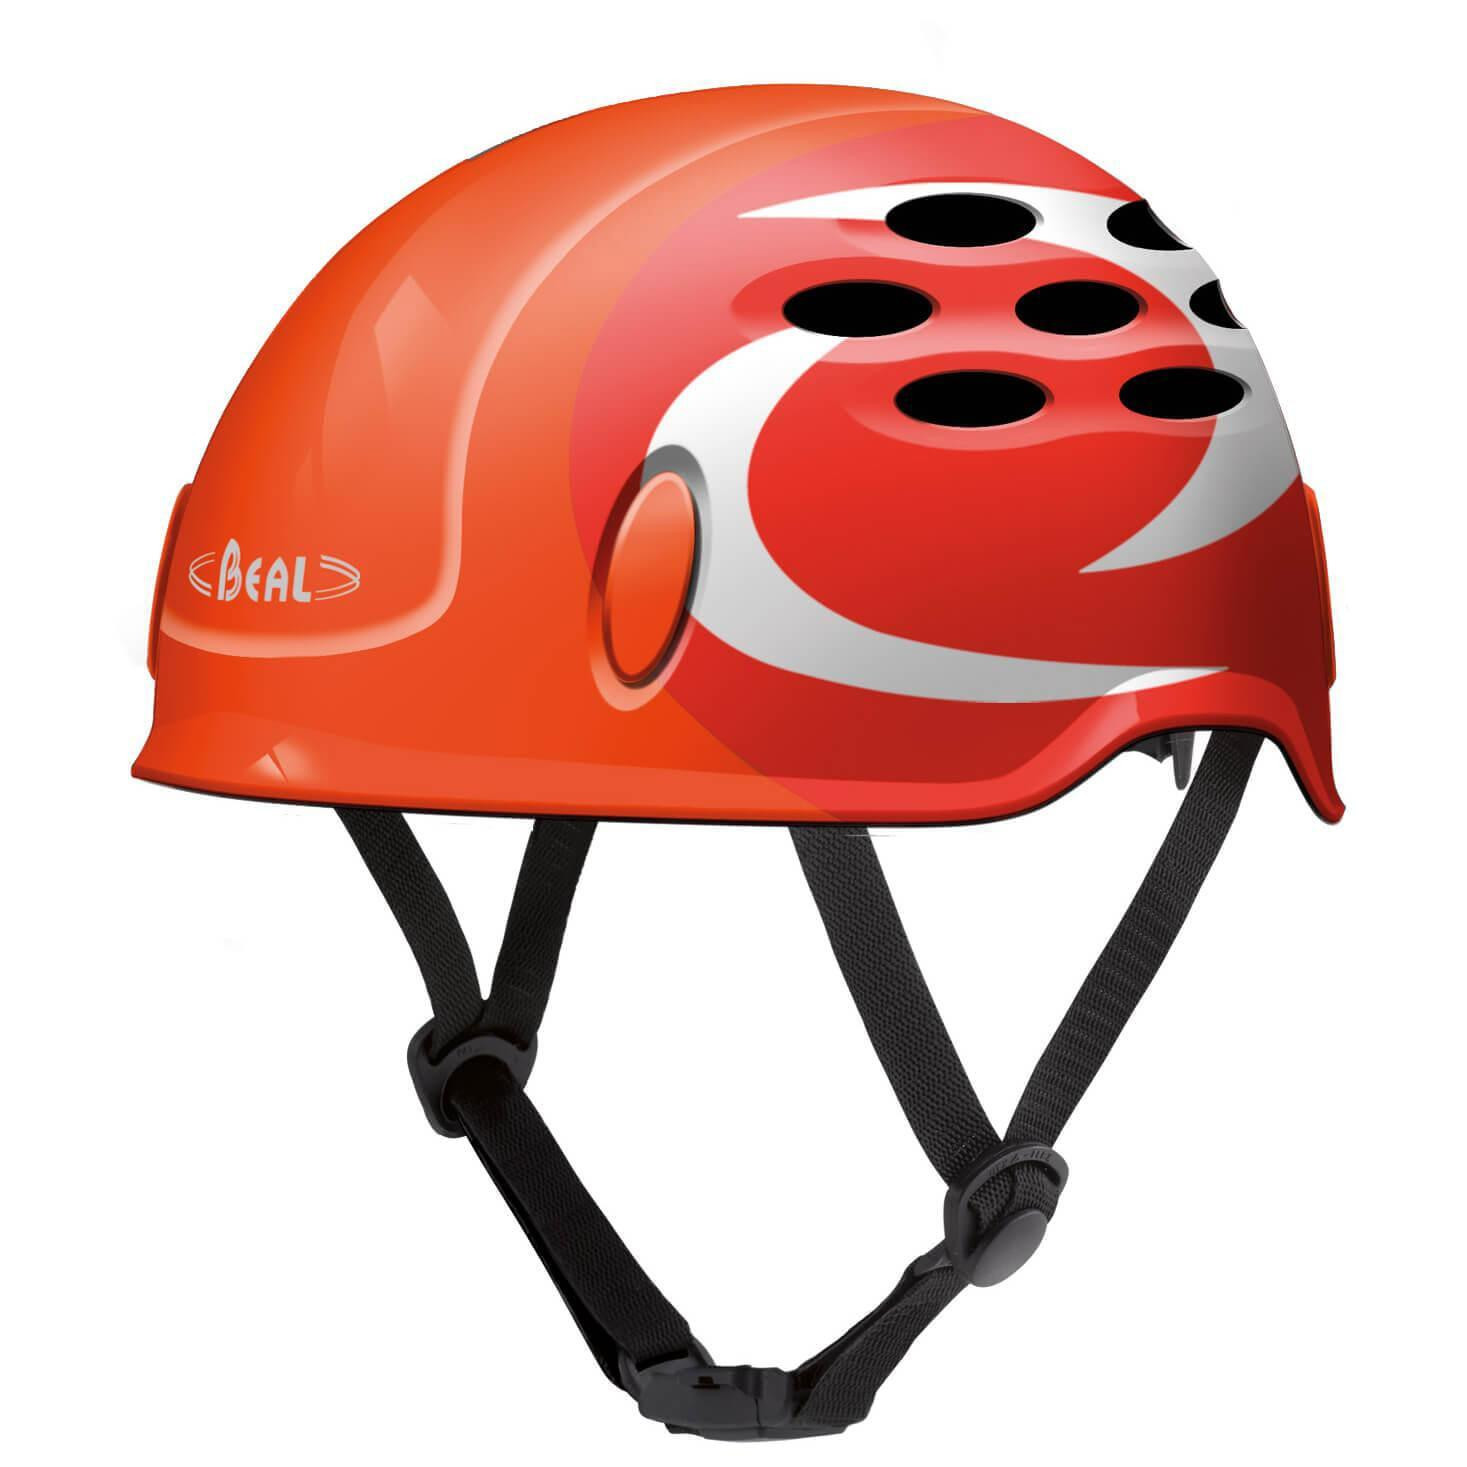 Beal Ikaros Hybrid Helmet